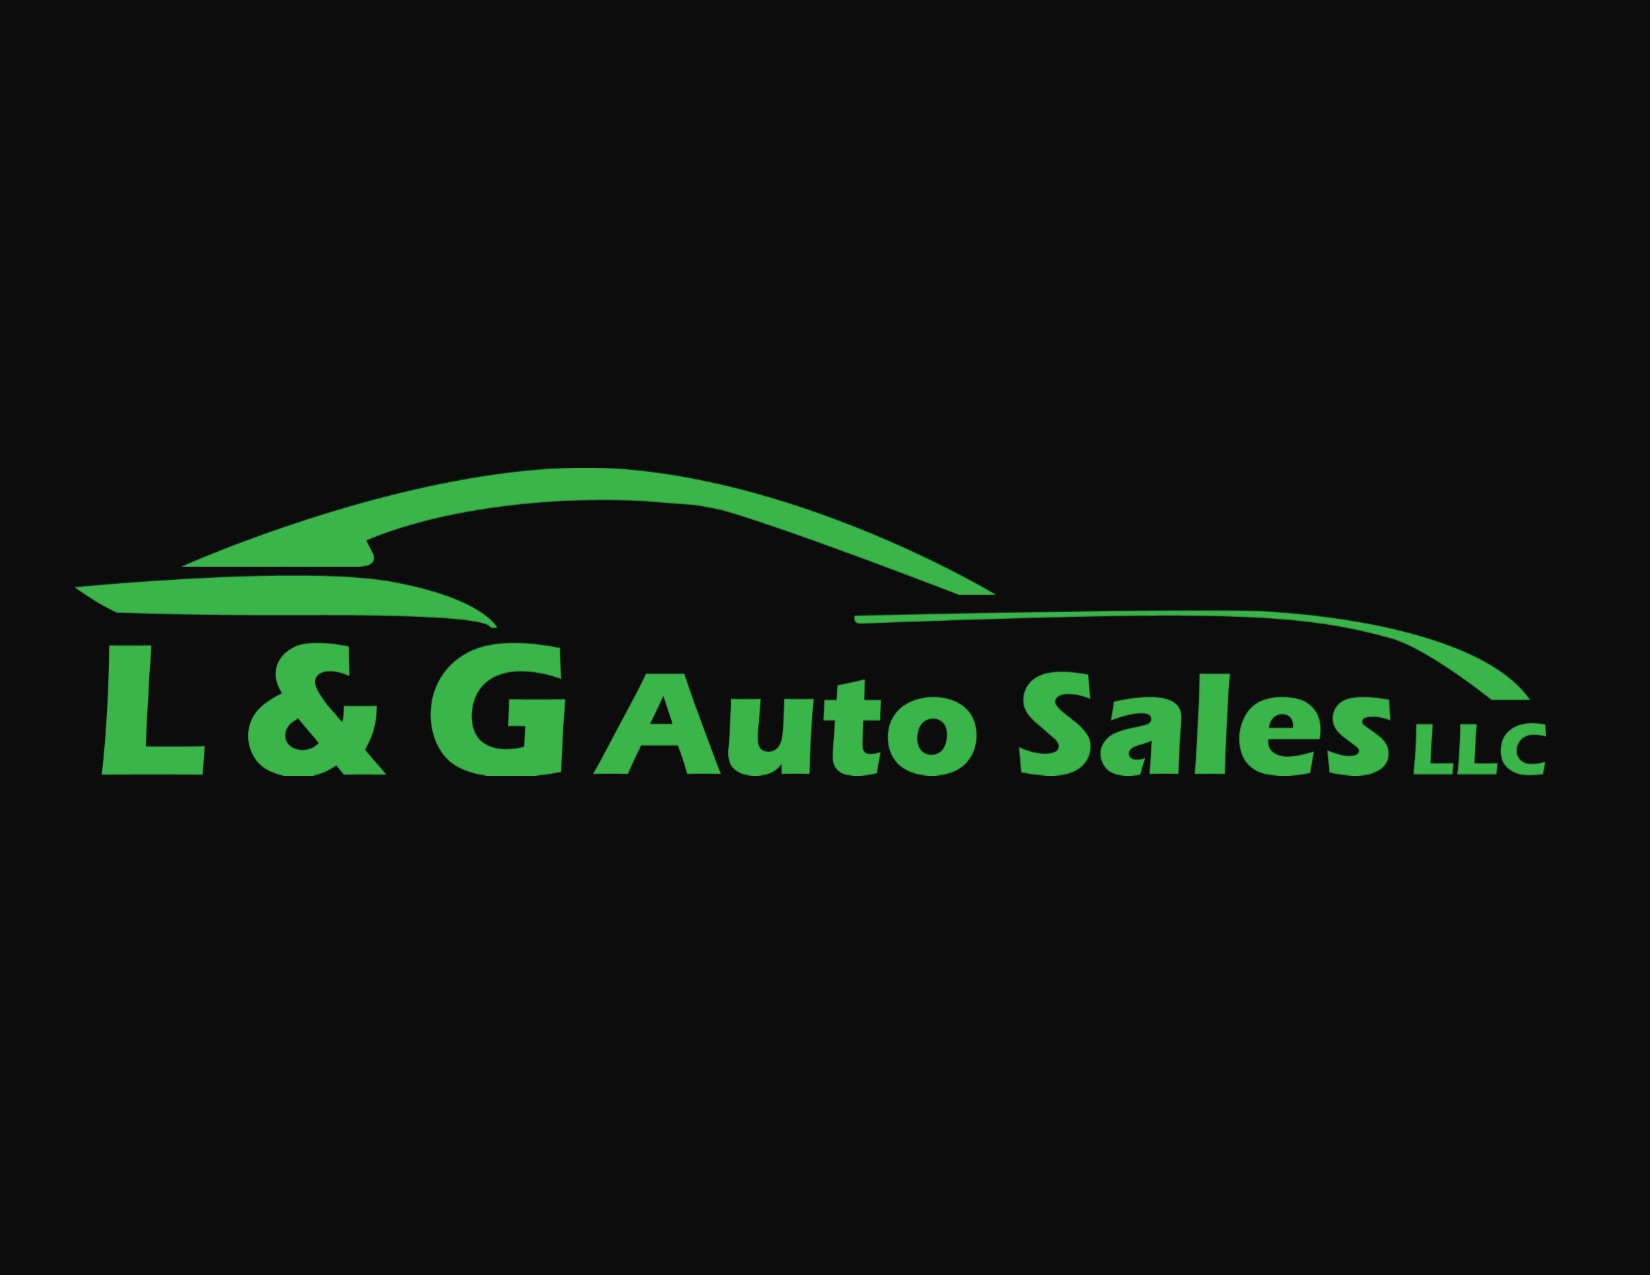 L&G Auto Sales